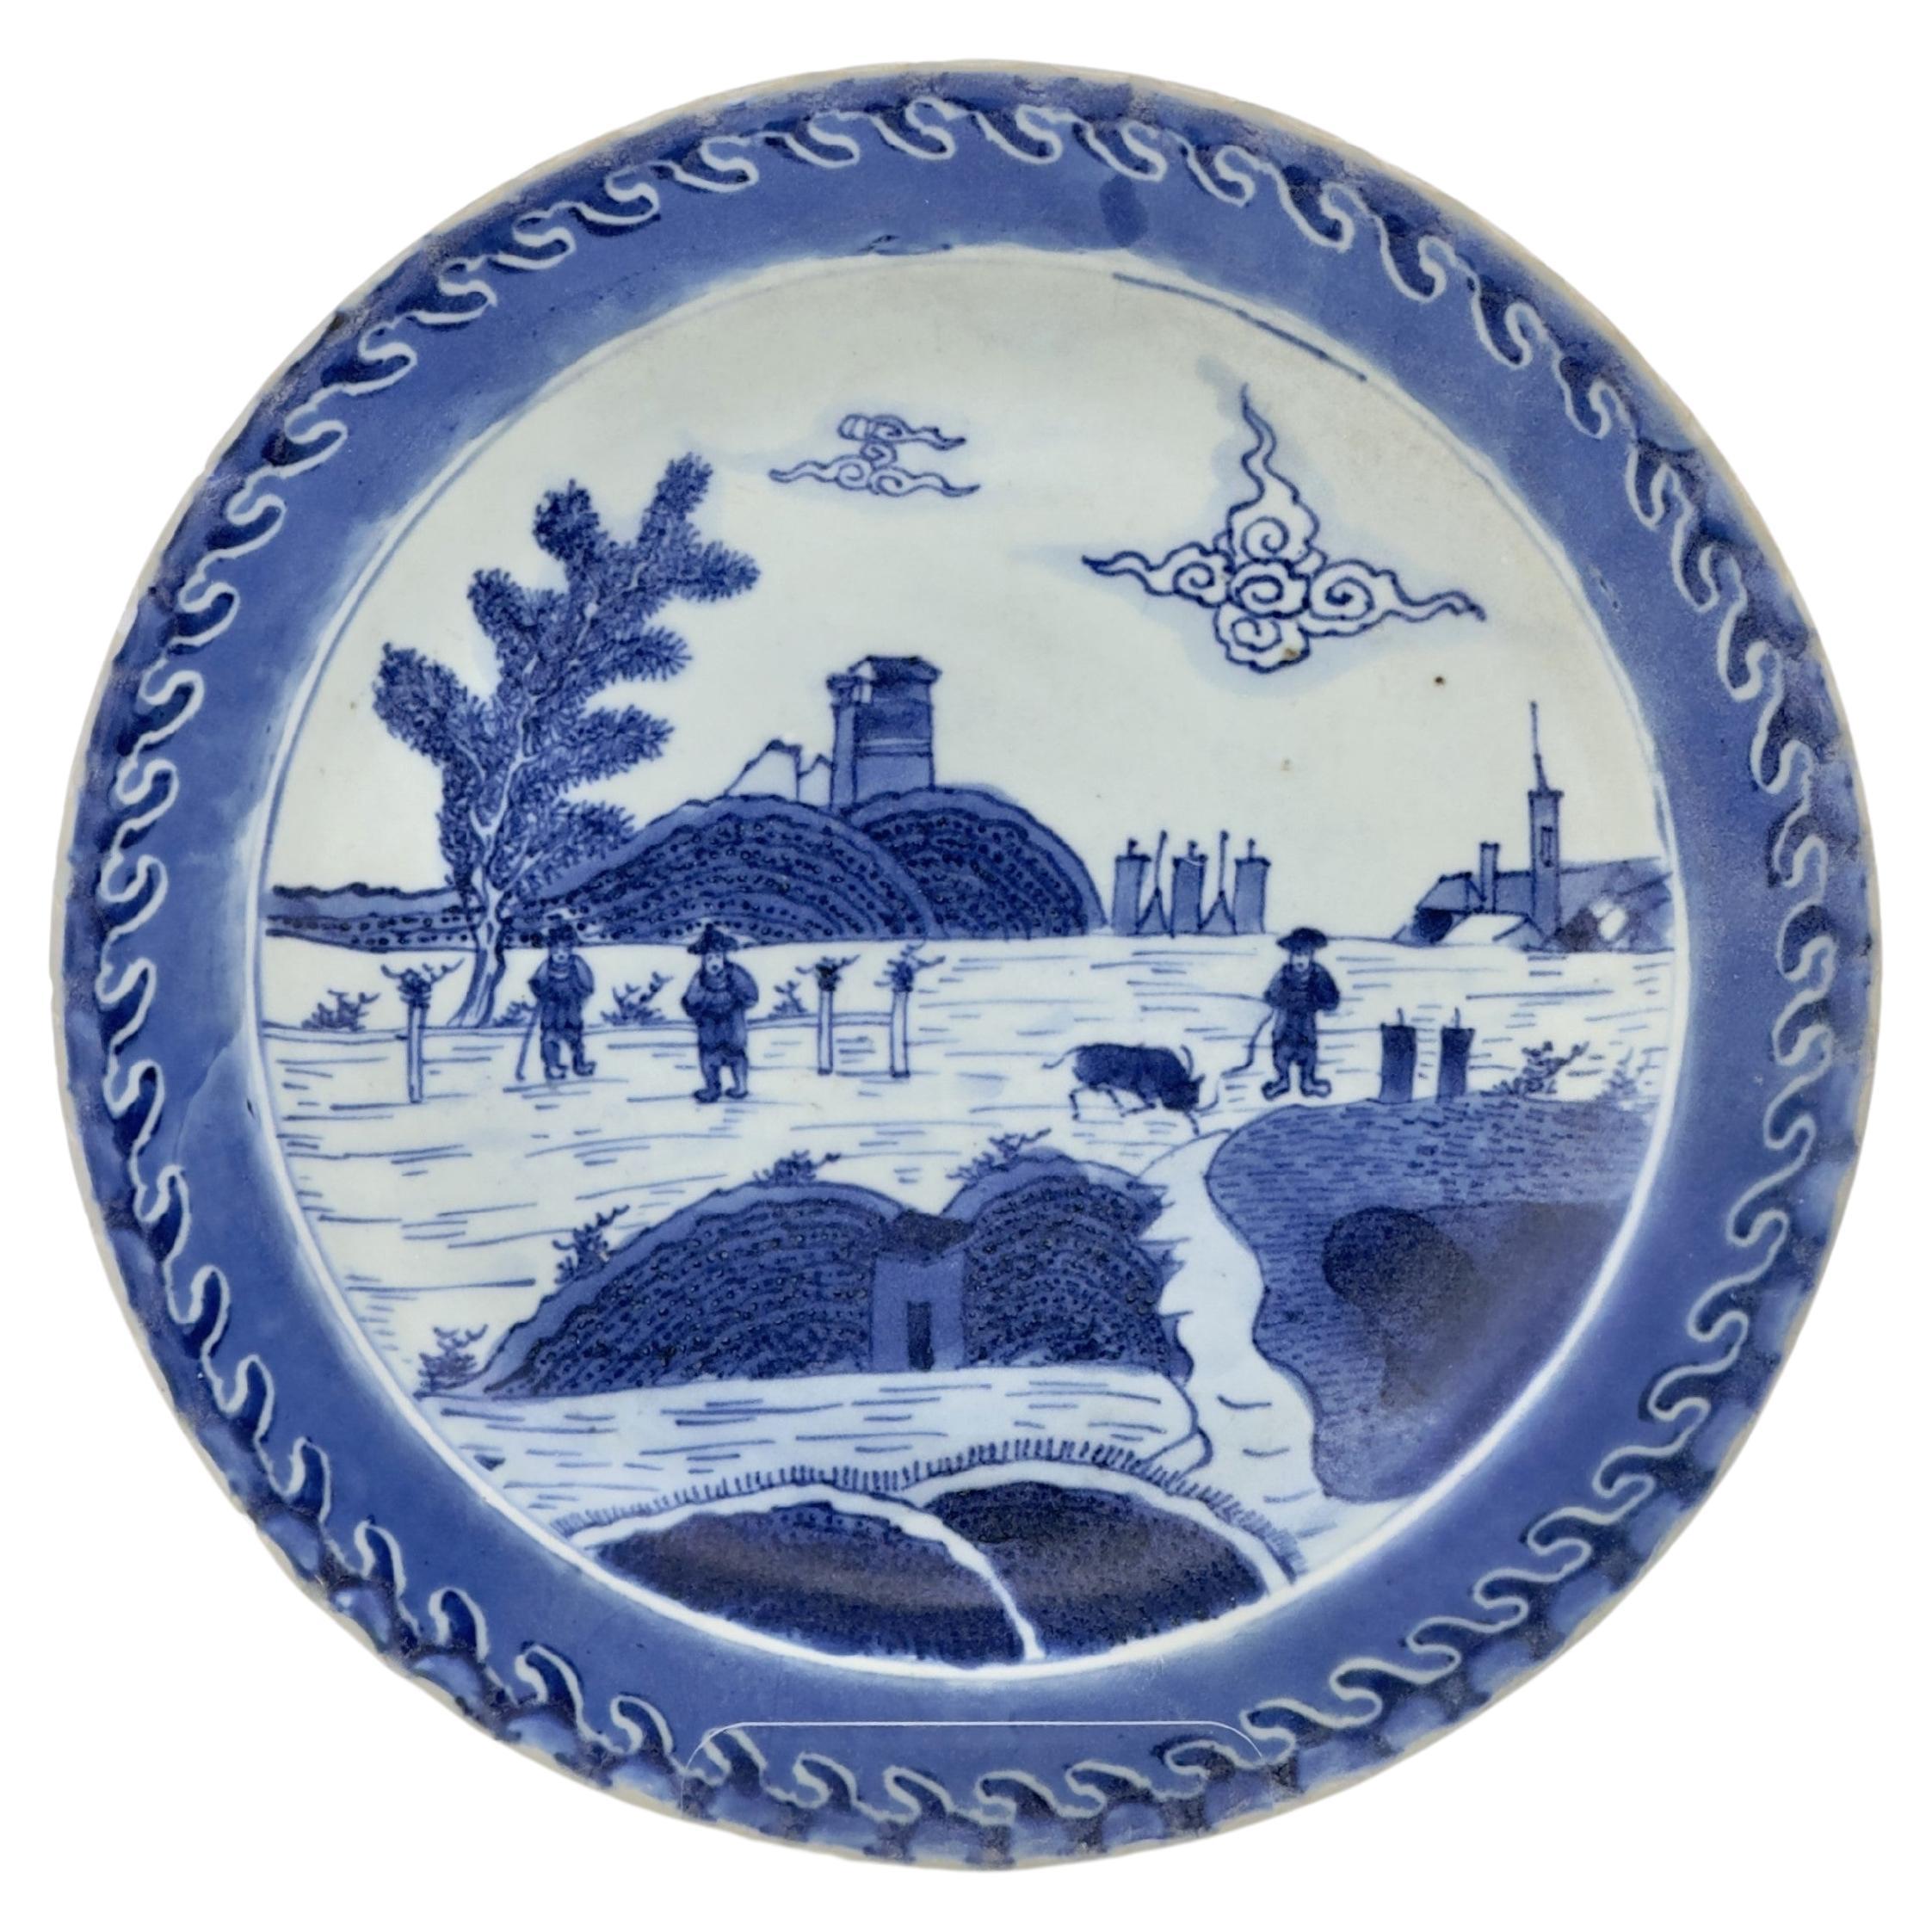  'Deshima Island' Pattern Blue and White dish c1725, Qing Dynasty, Yongzheng Era